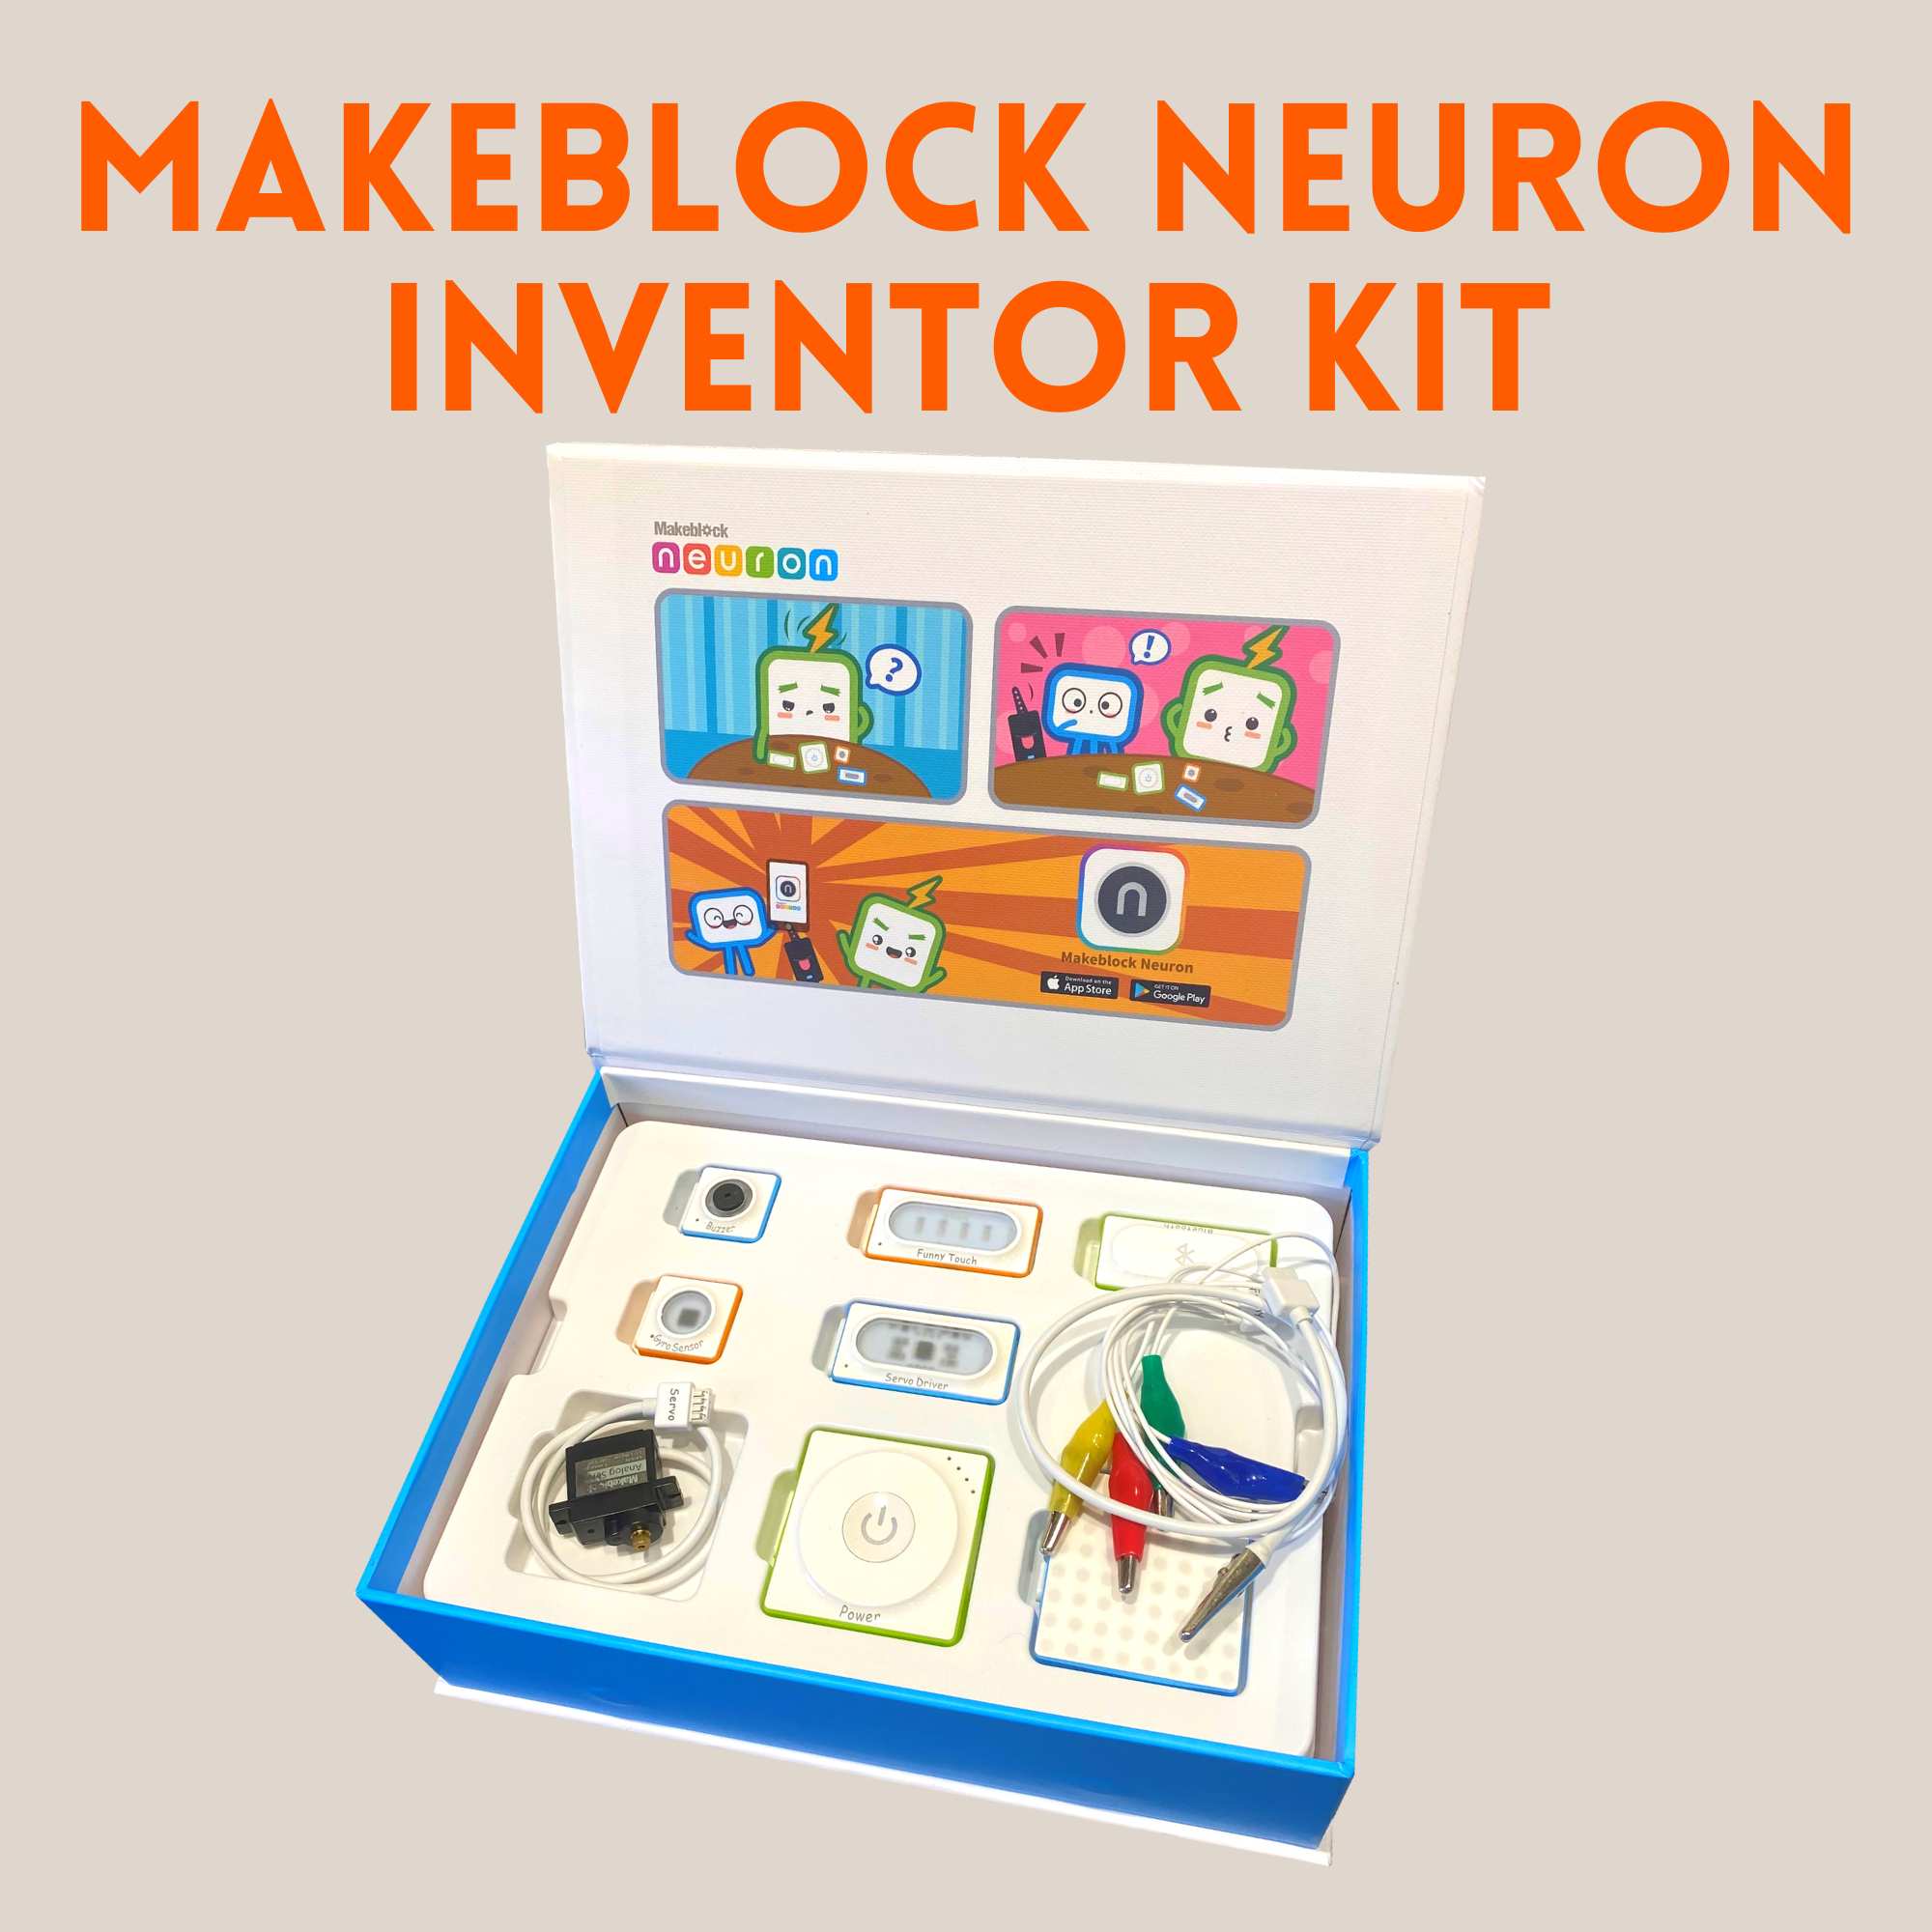 Makeblock Neuron Inventor Kit